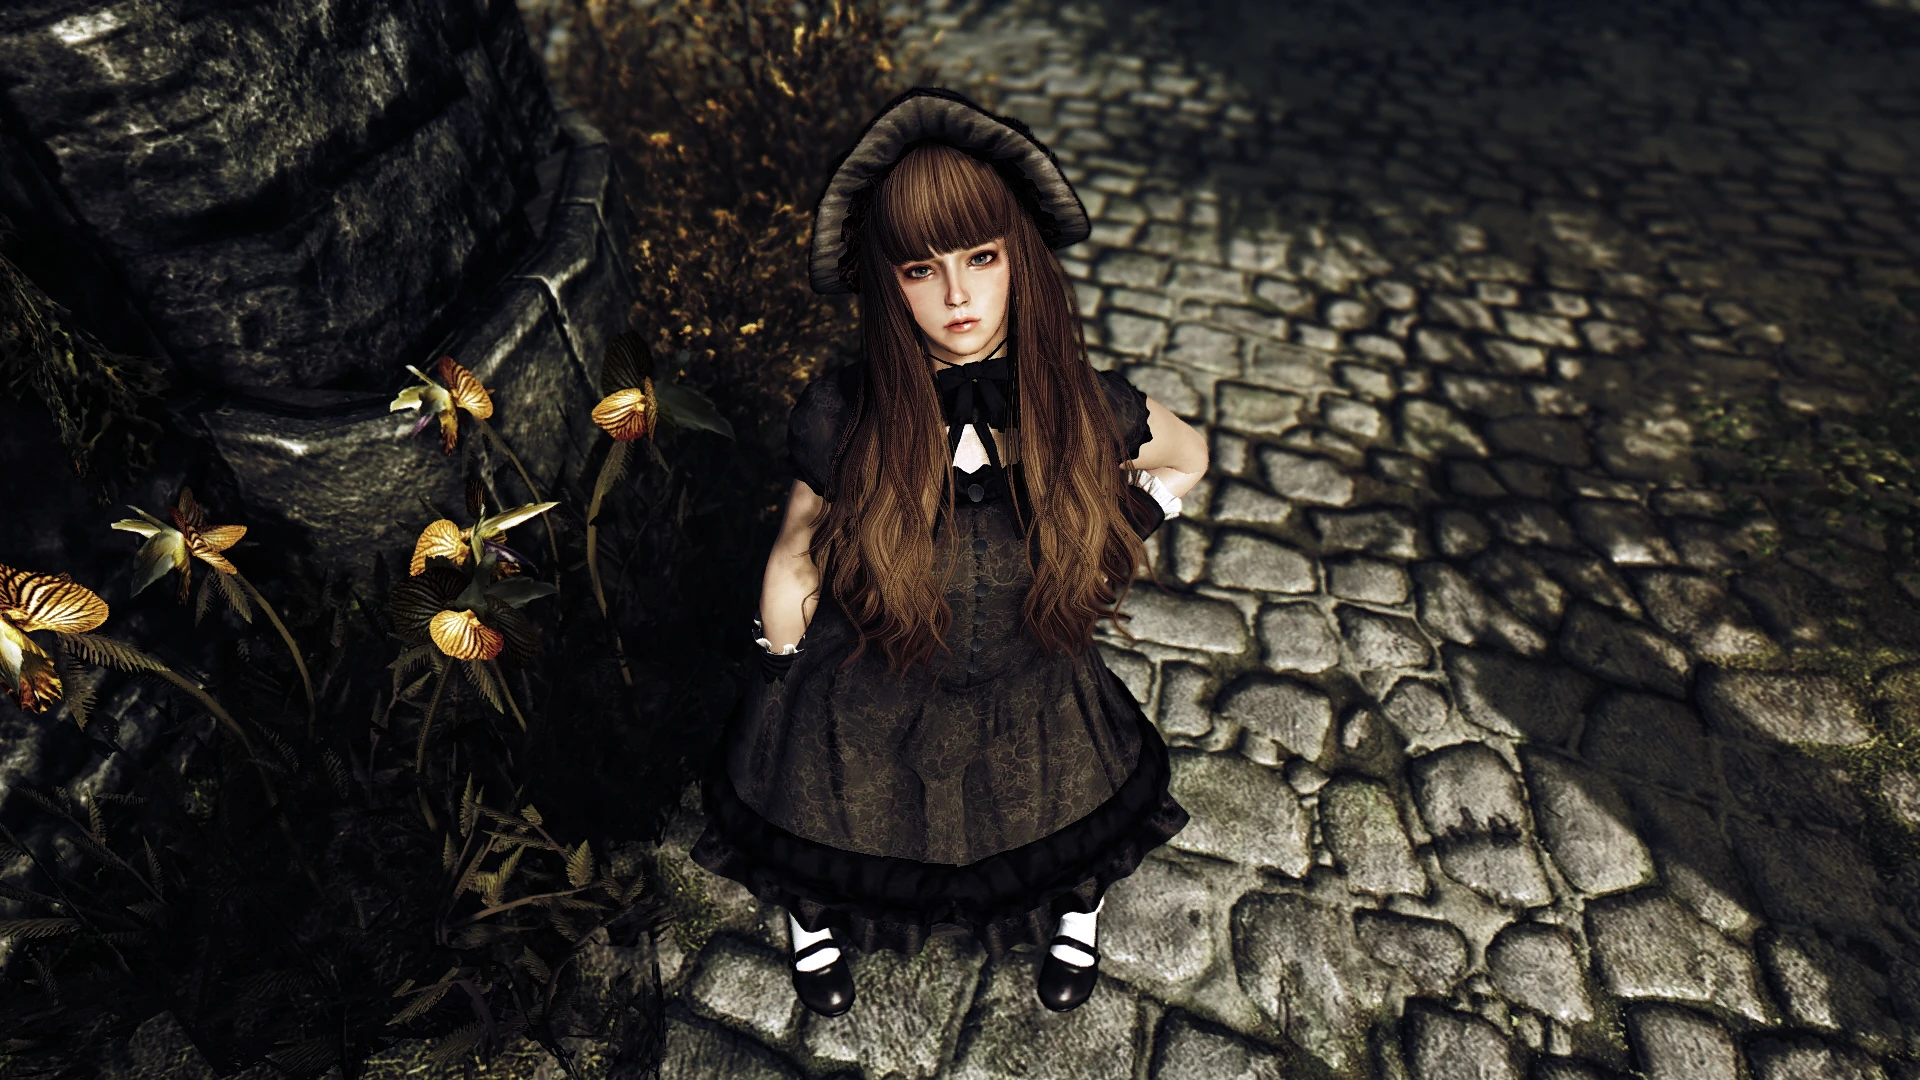 File:Black lolita.jpg - Wikipedia